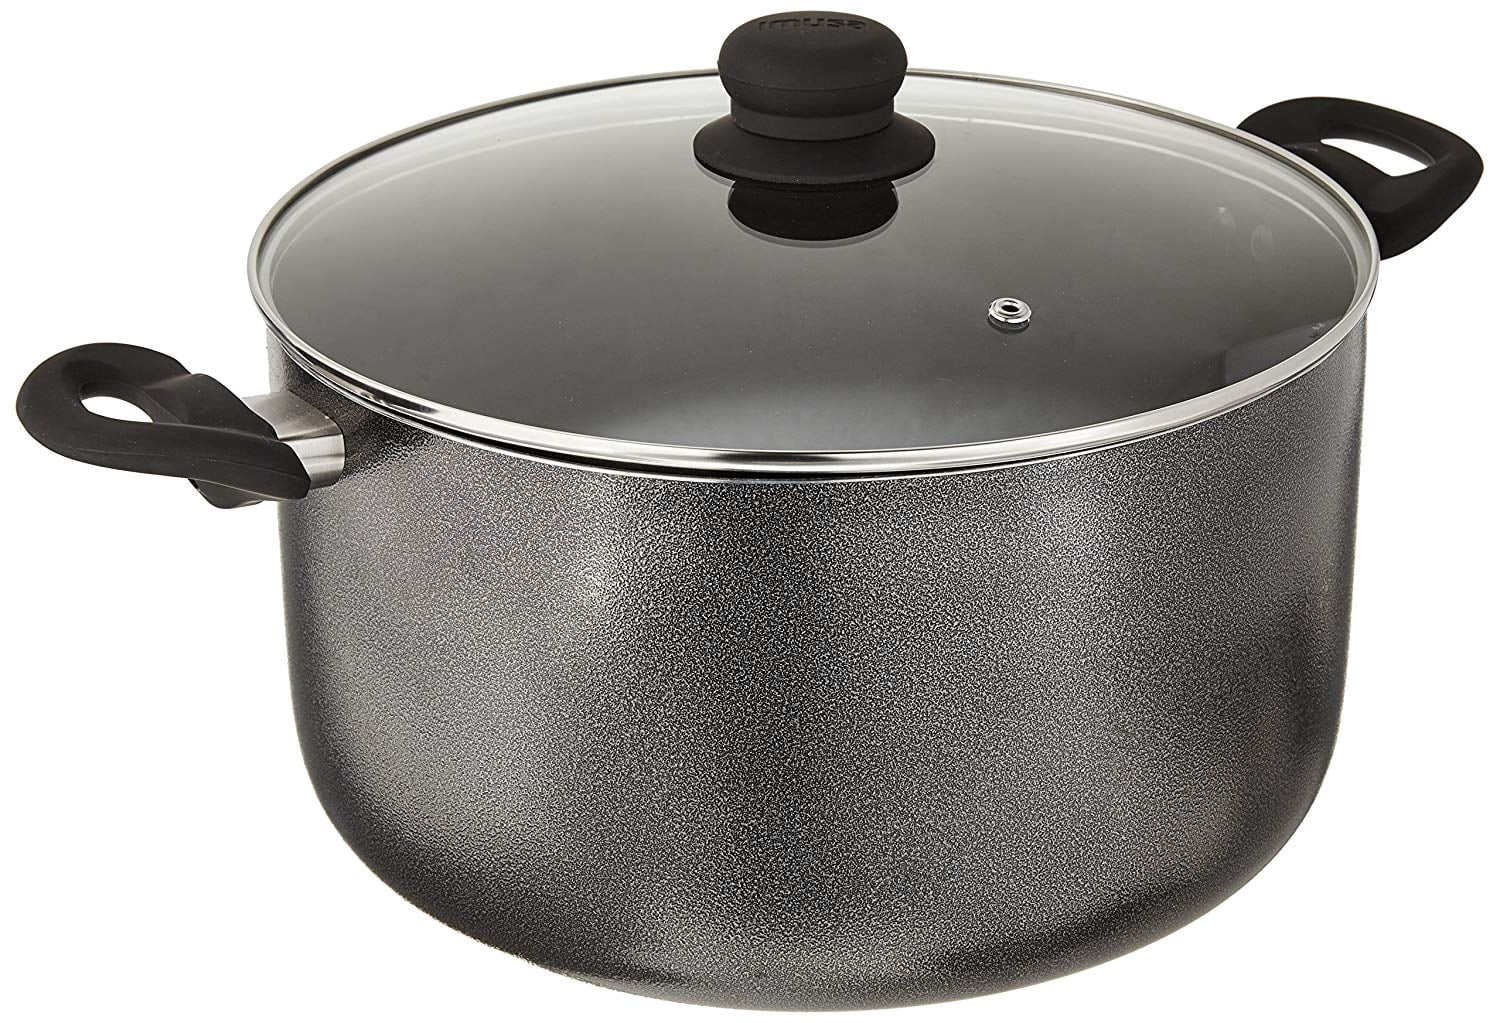 MICHELANGELO 5 Quart Nonstick Stock Pot with Lid,Soup Pot with Wood Grain Bakelite Handle Casserole Dish Cooking Pot Healthy Cookware Induction Compatible